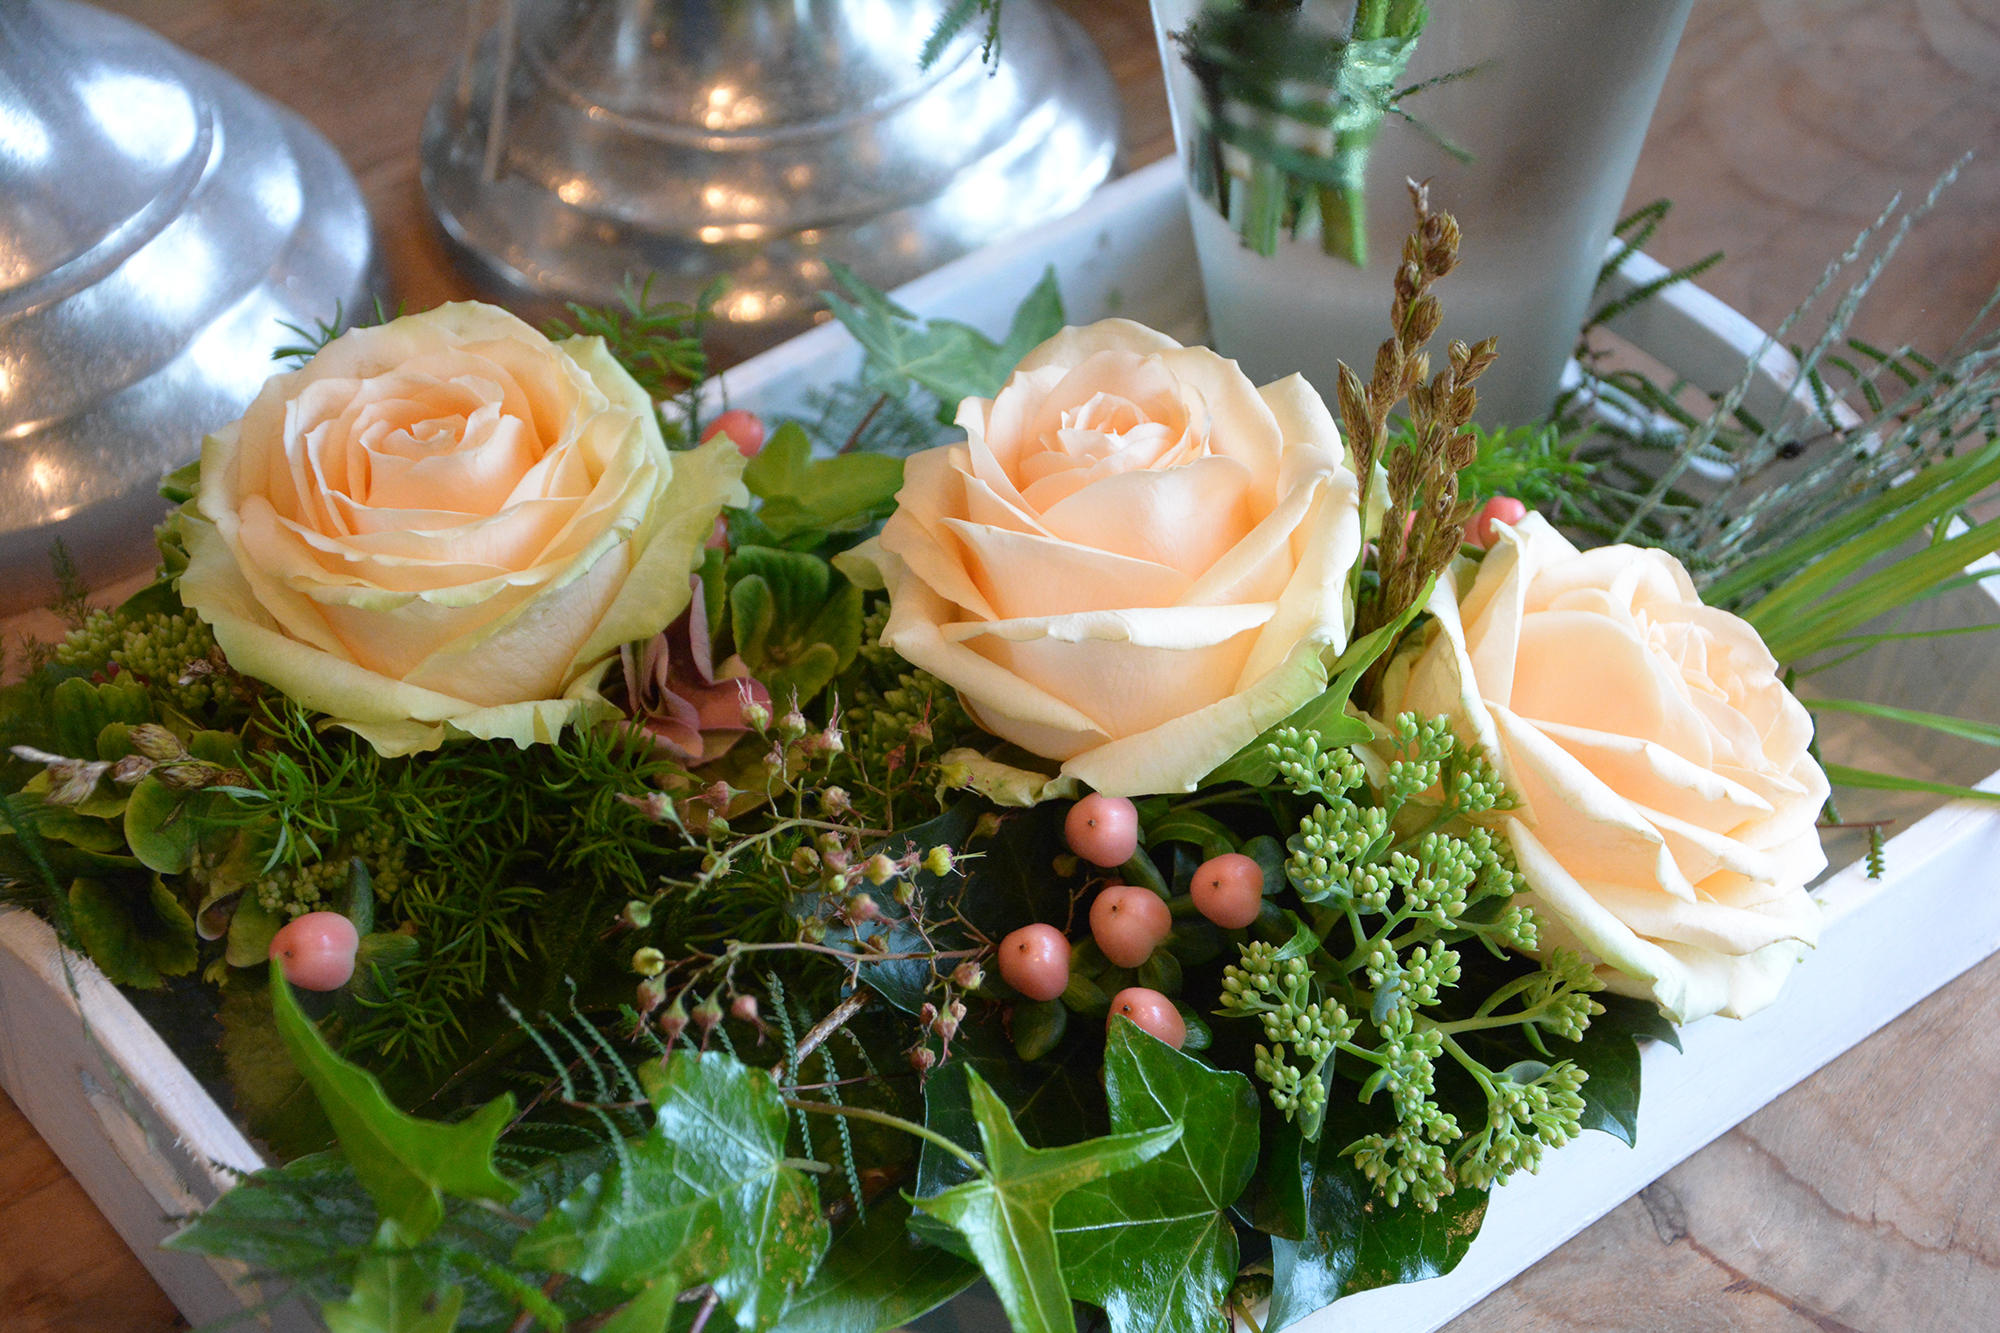 Kundenbild groß 2 Blumen Interfleur Floristik & Wohnaccessoires